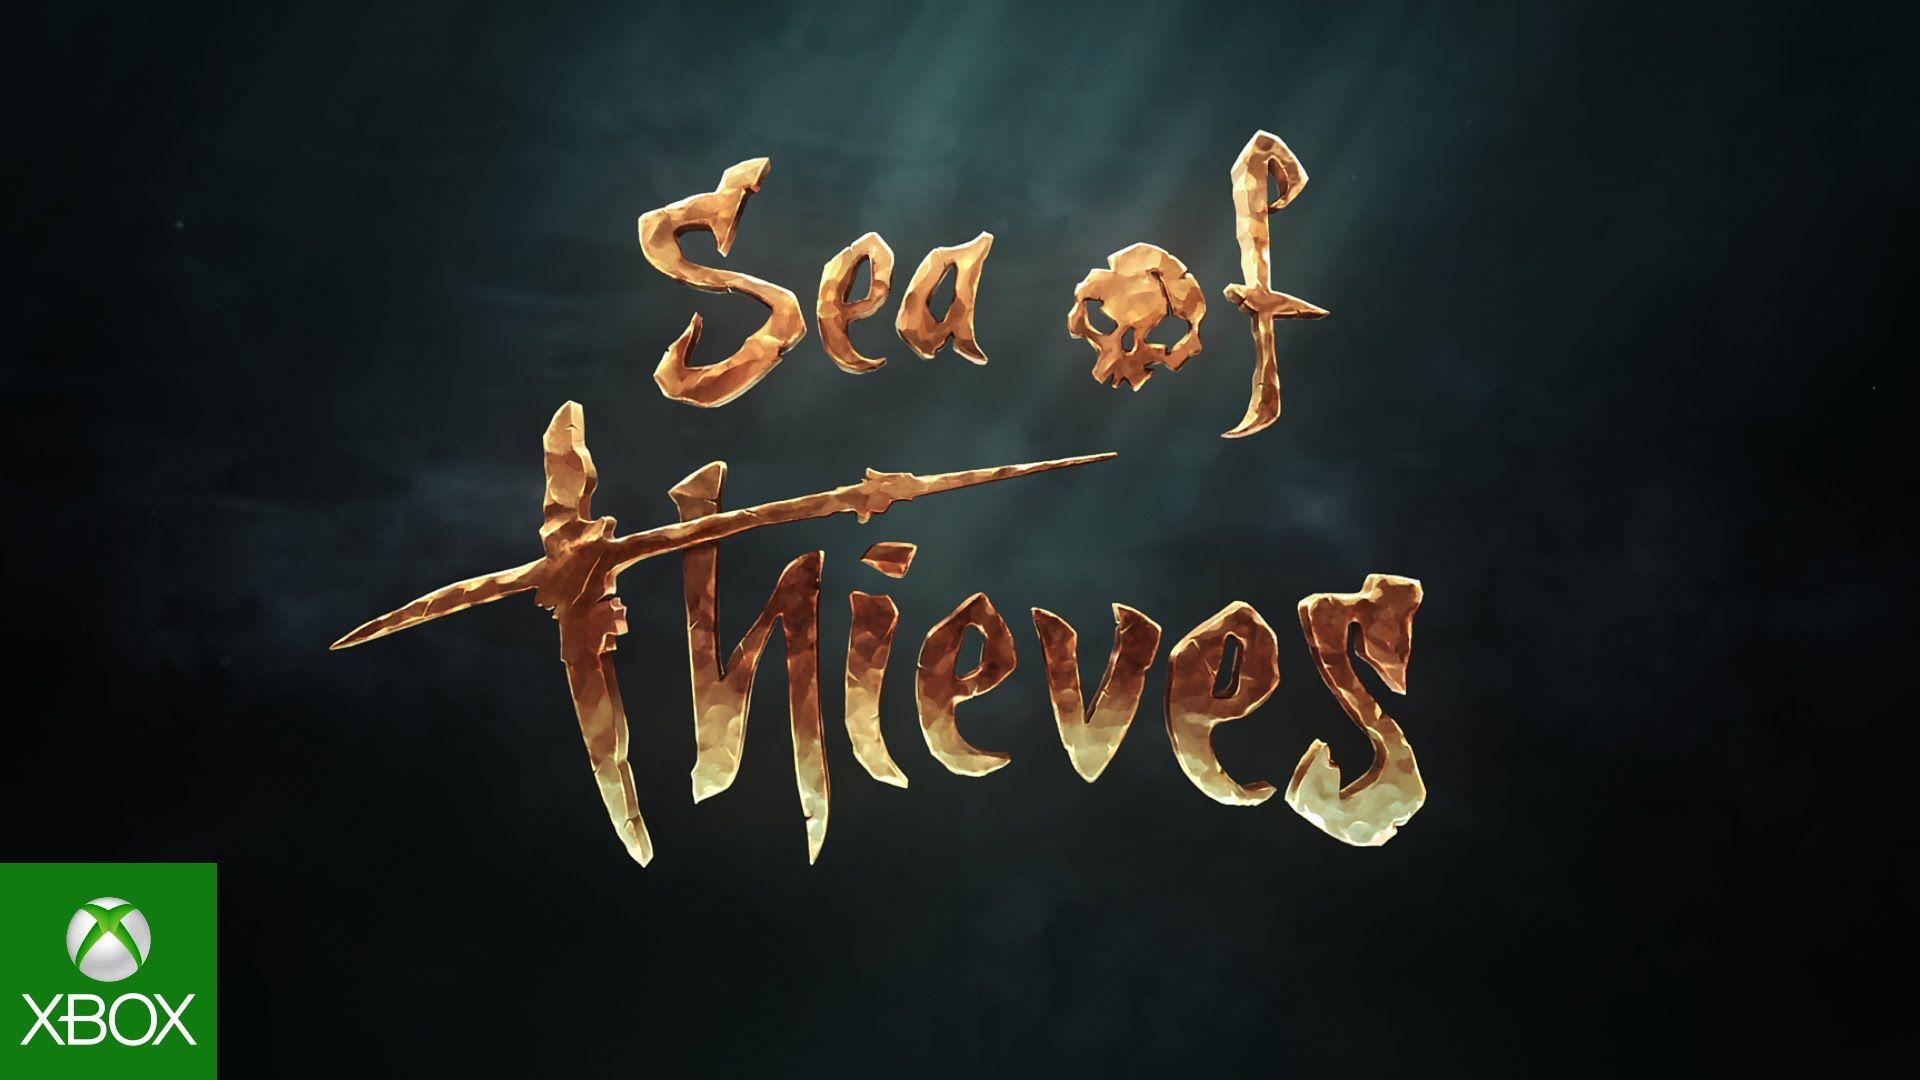 Sea of Thieves E3 Announce Trailer